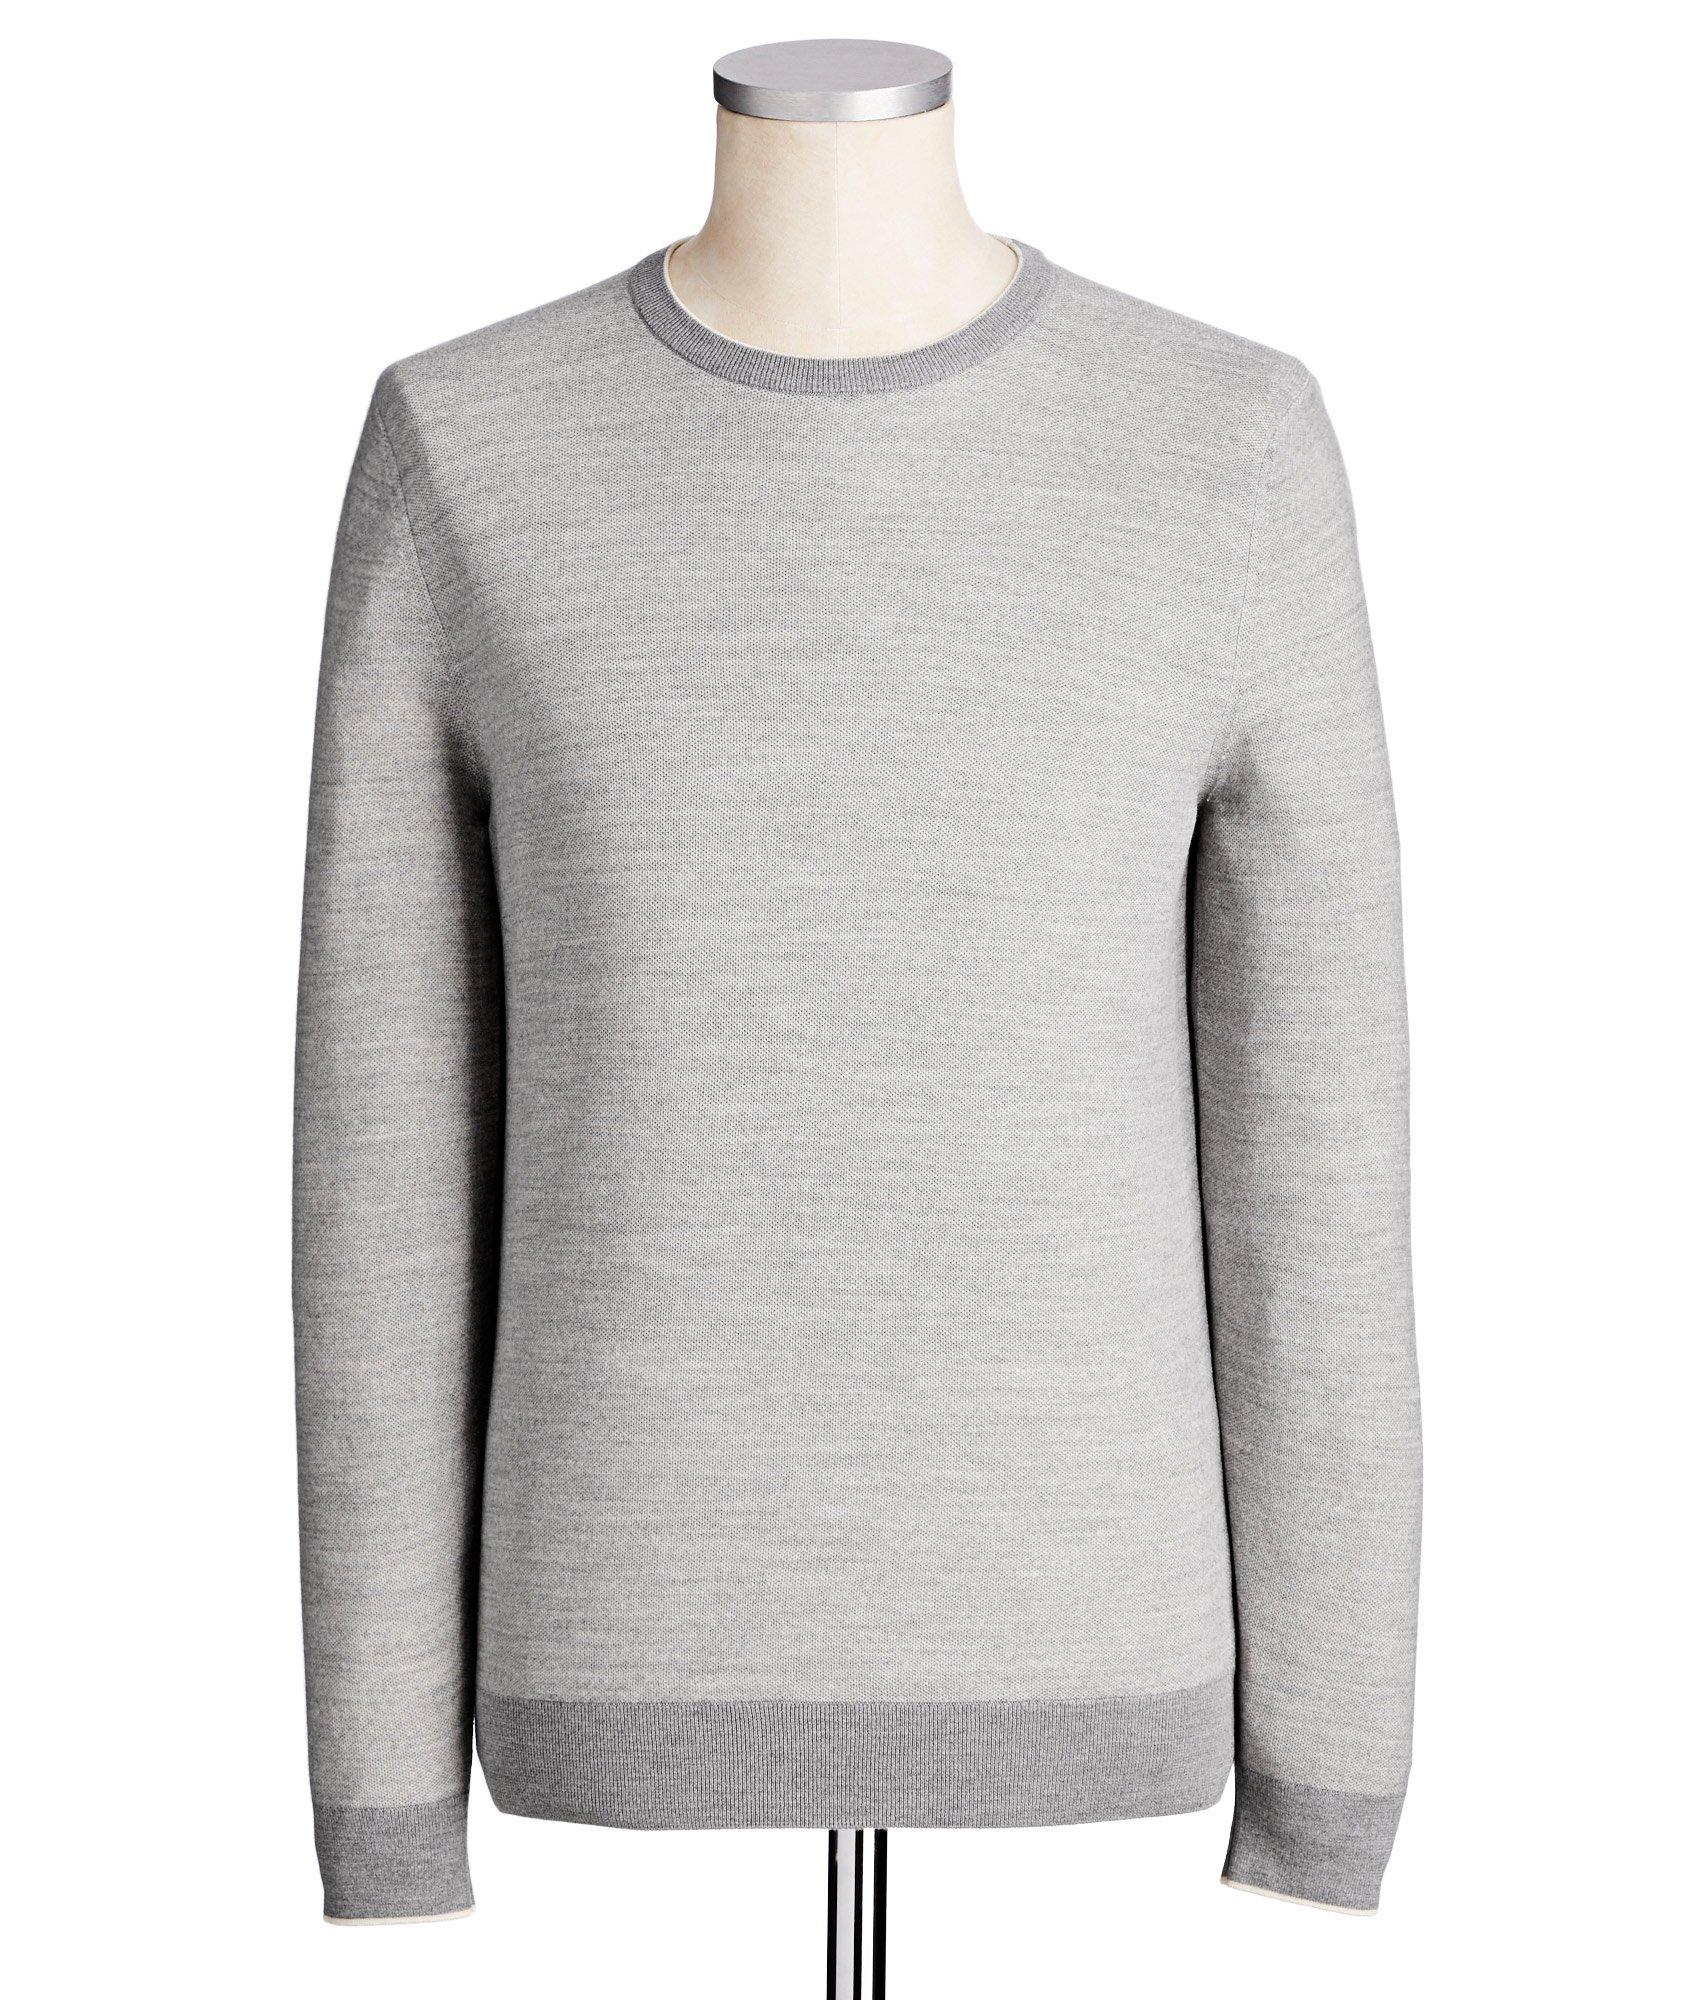 Cashmere & Virgin Wool Blend Sweater image 0